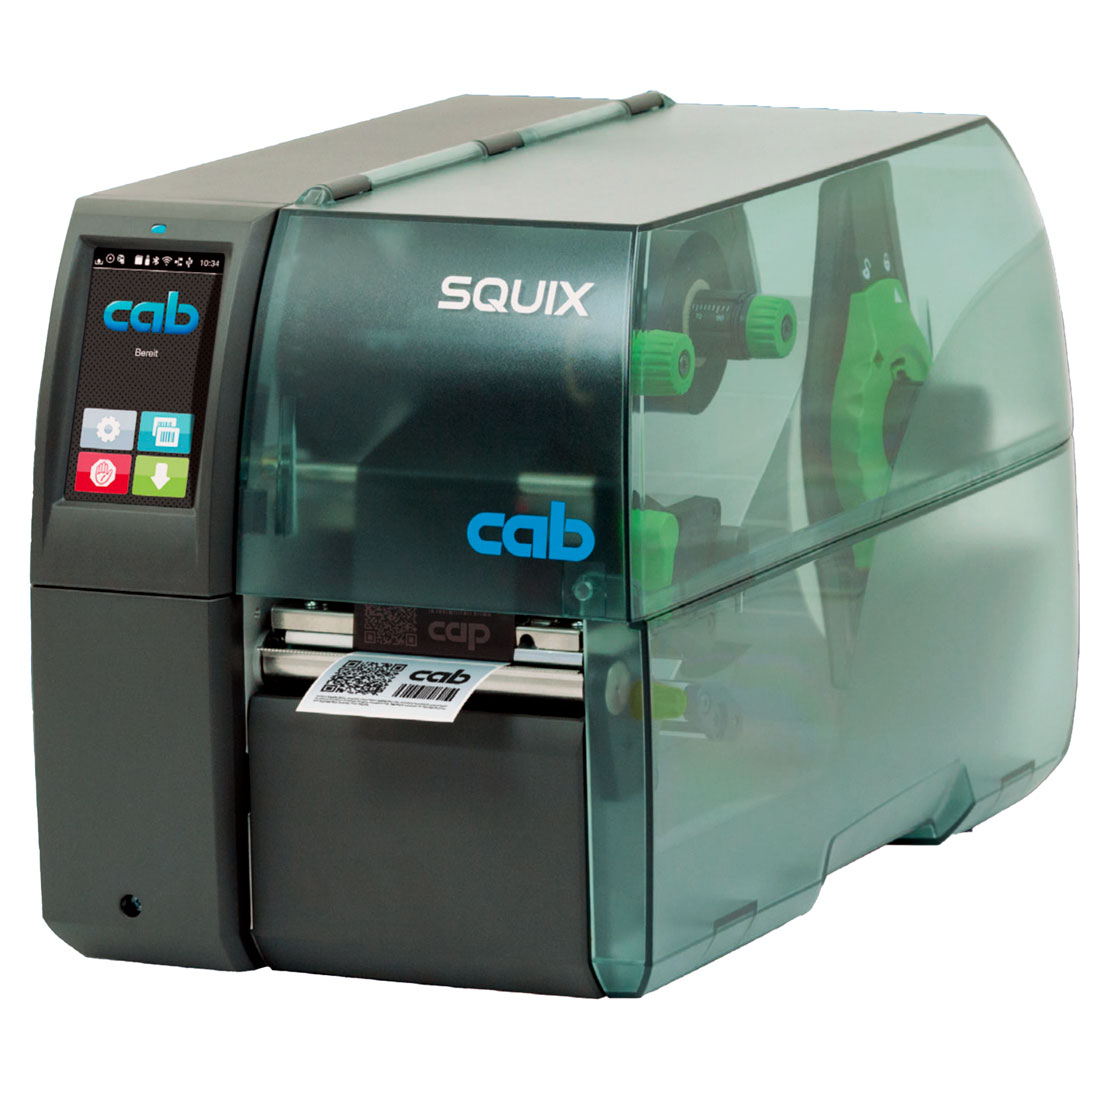 Imprimante industrielle CAB SQUIX 300 dpi